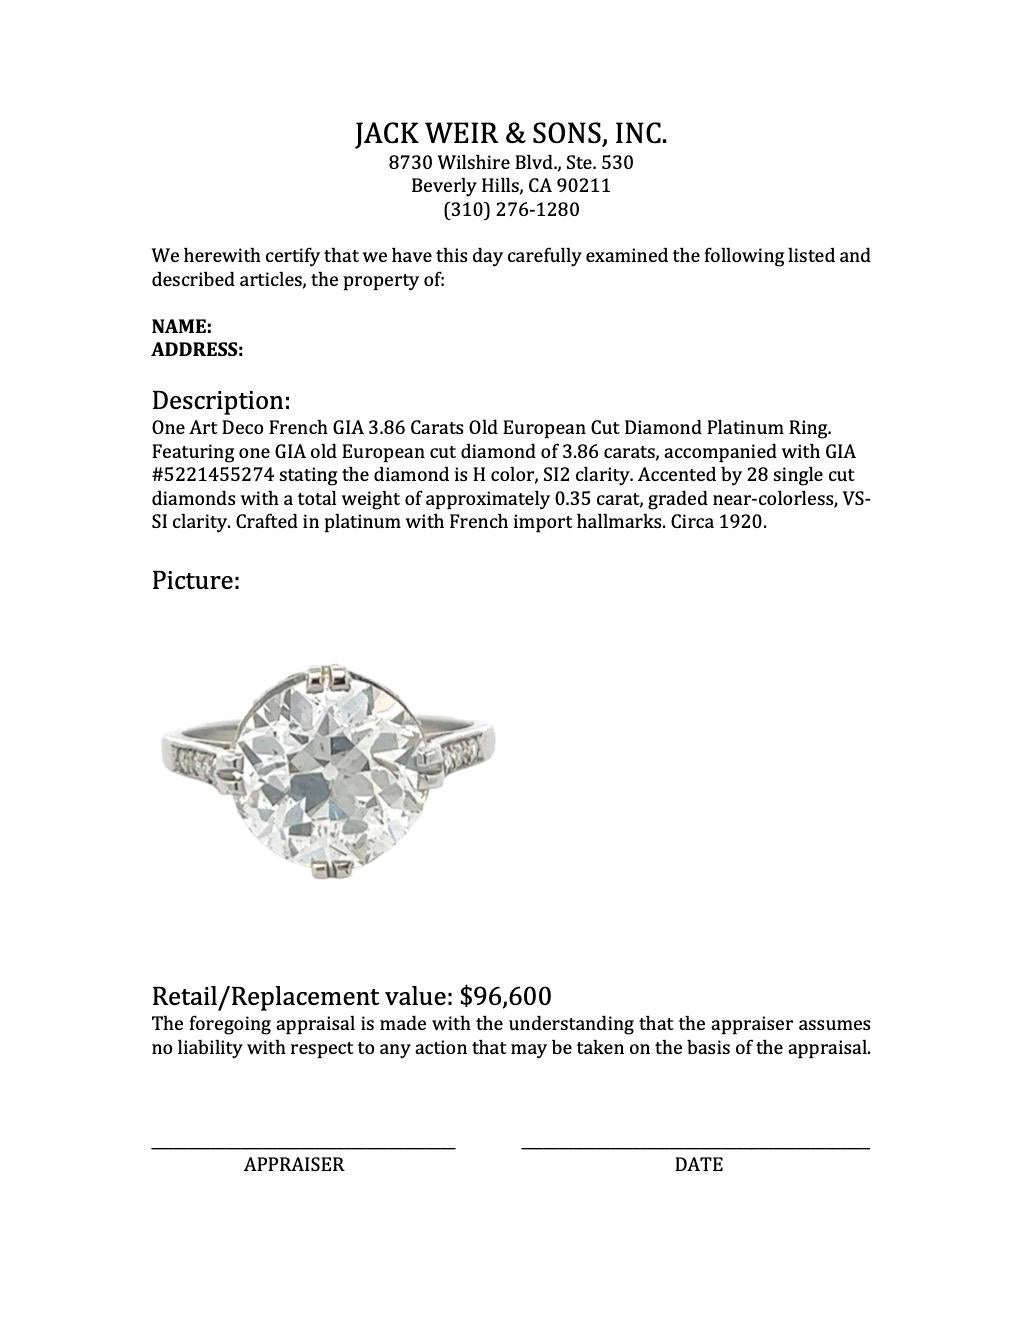 Art Deco French GIA 3.86 Carats Old European Cut Diamond Platinum Ring 4